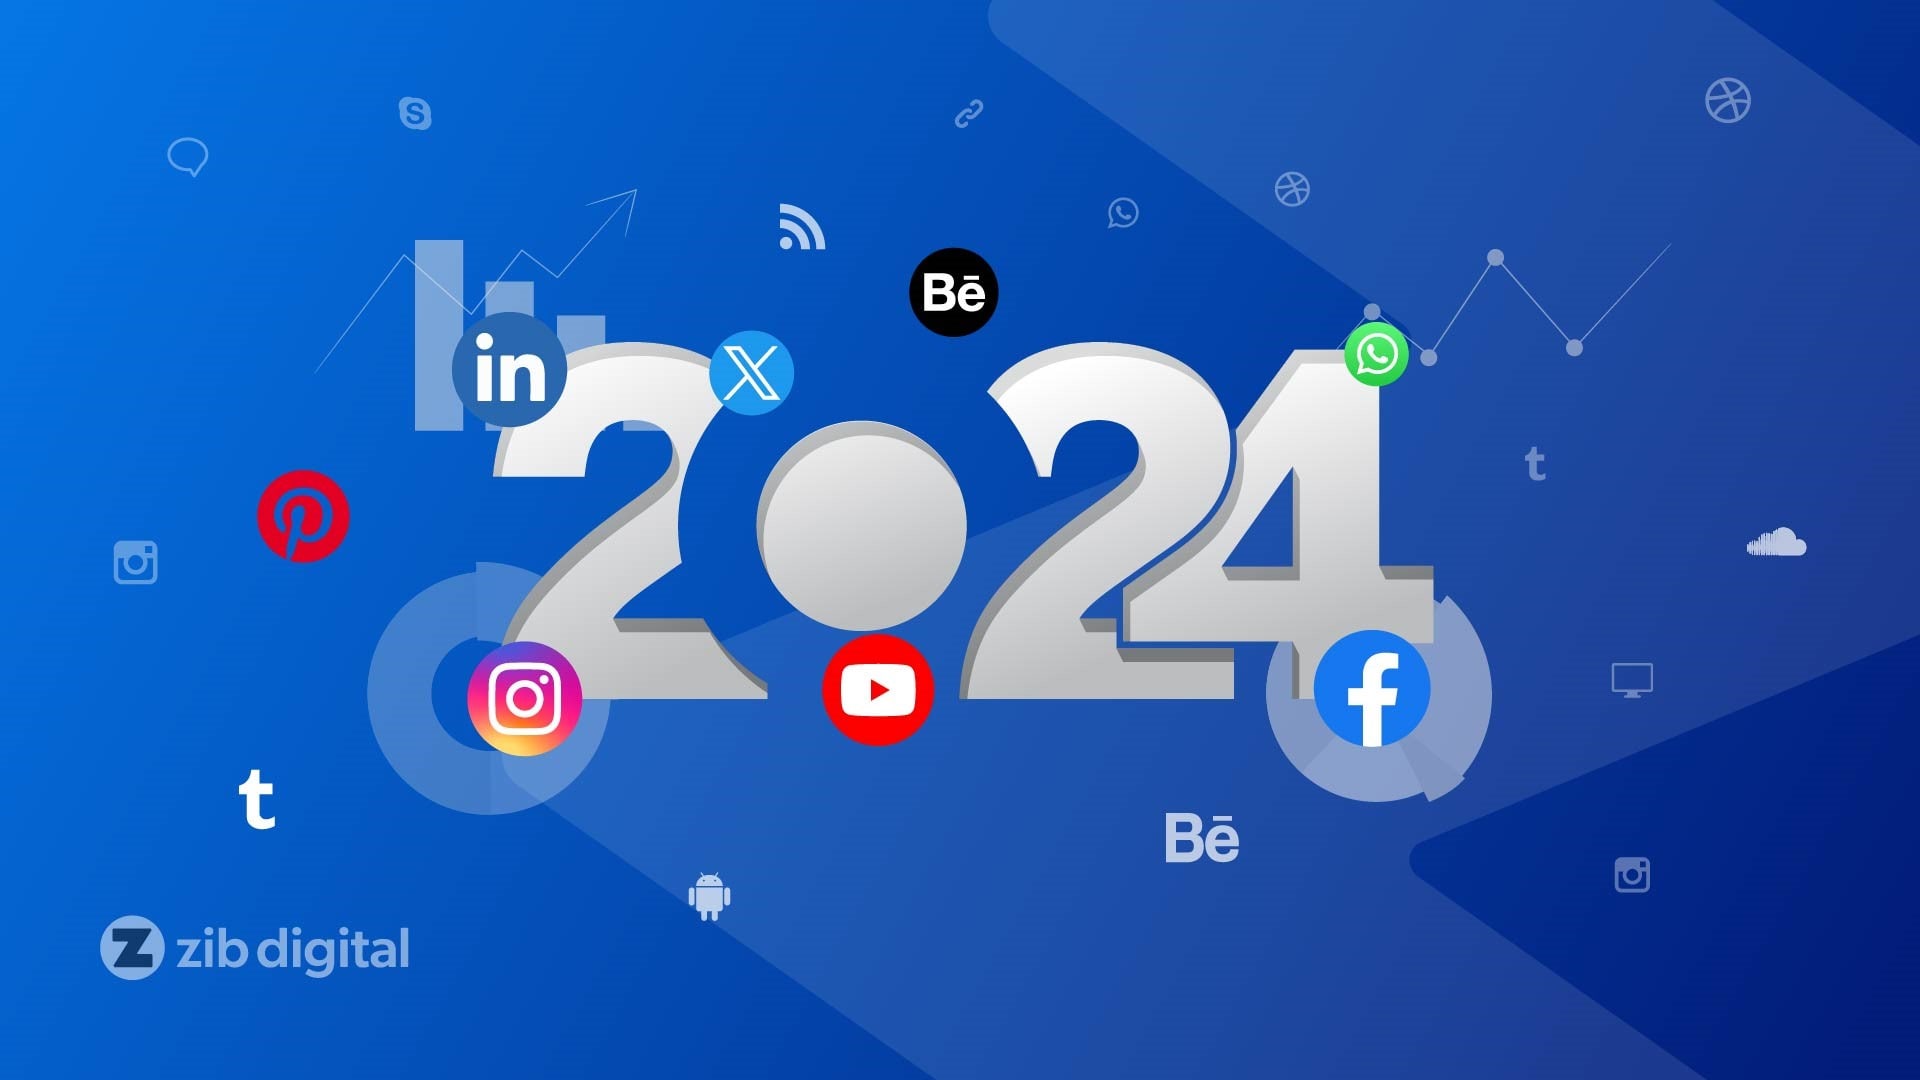 How to increase brand awareness through social media in 2024?